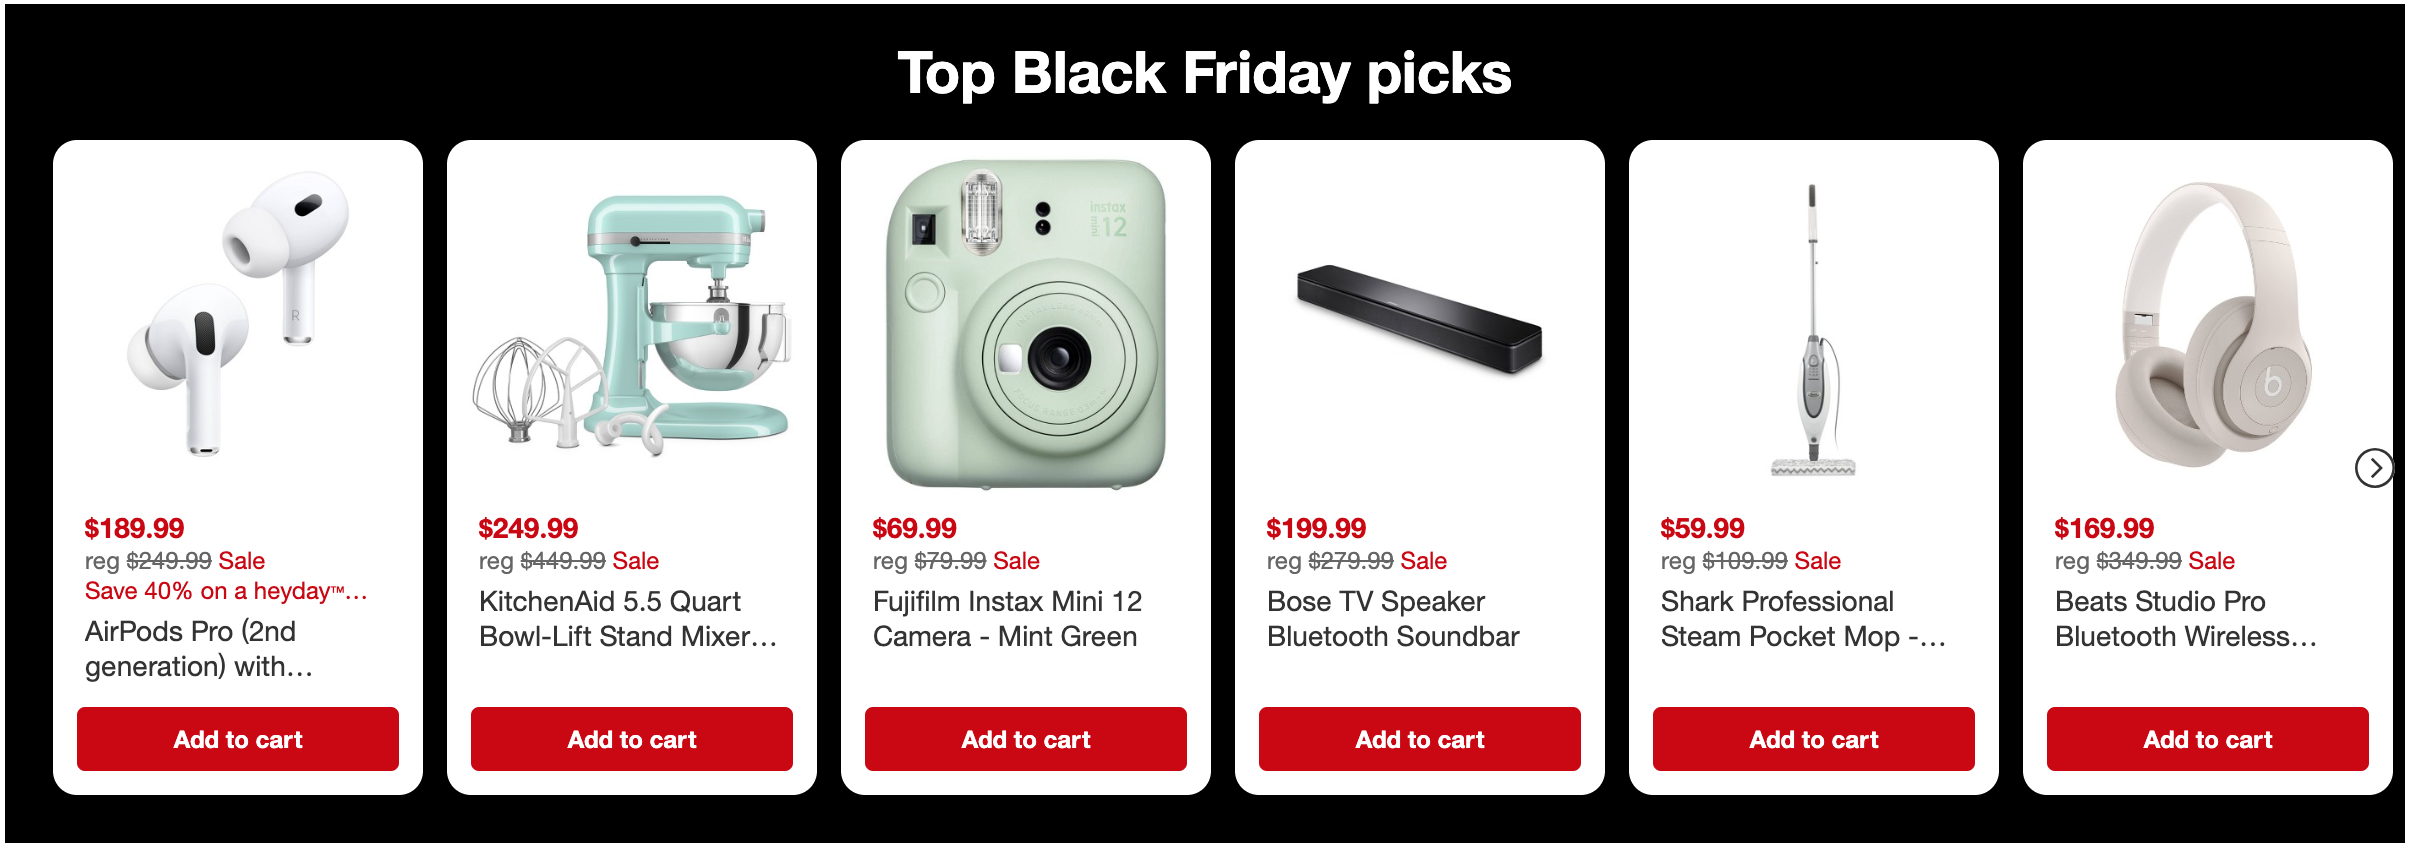 Target Black Friday deals top picks